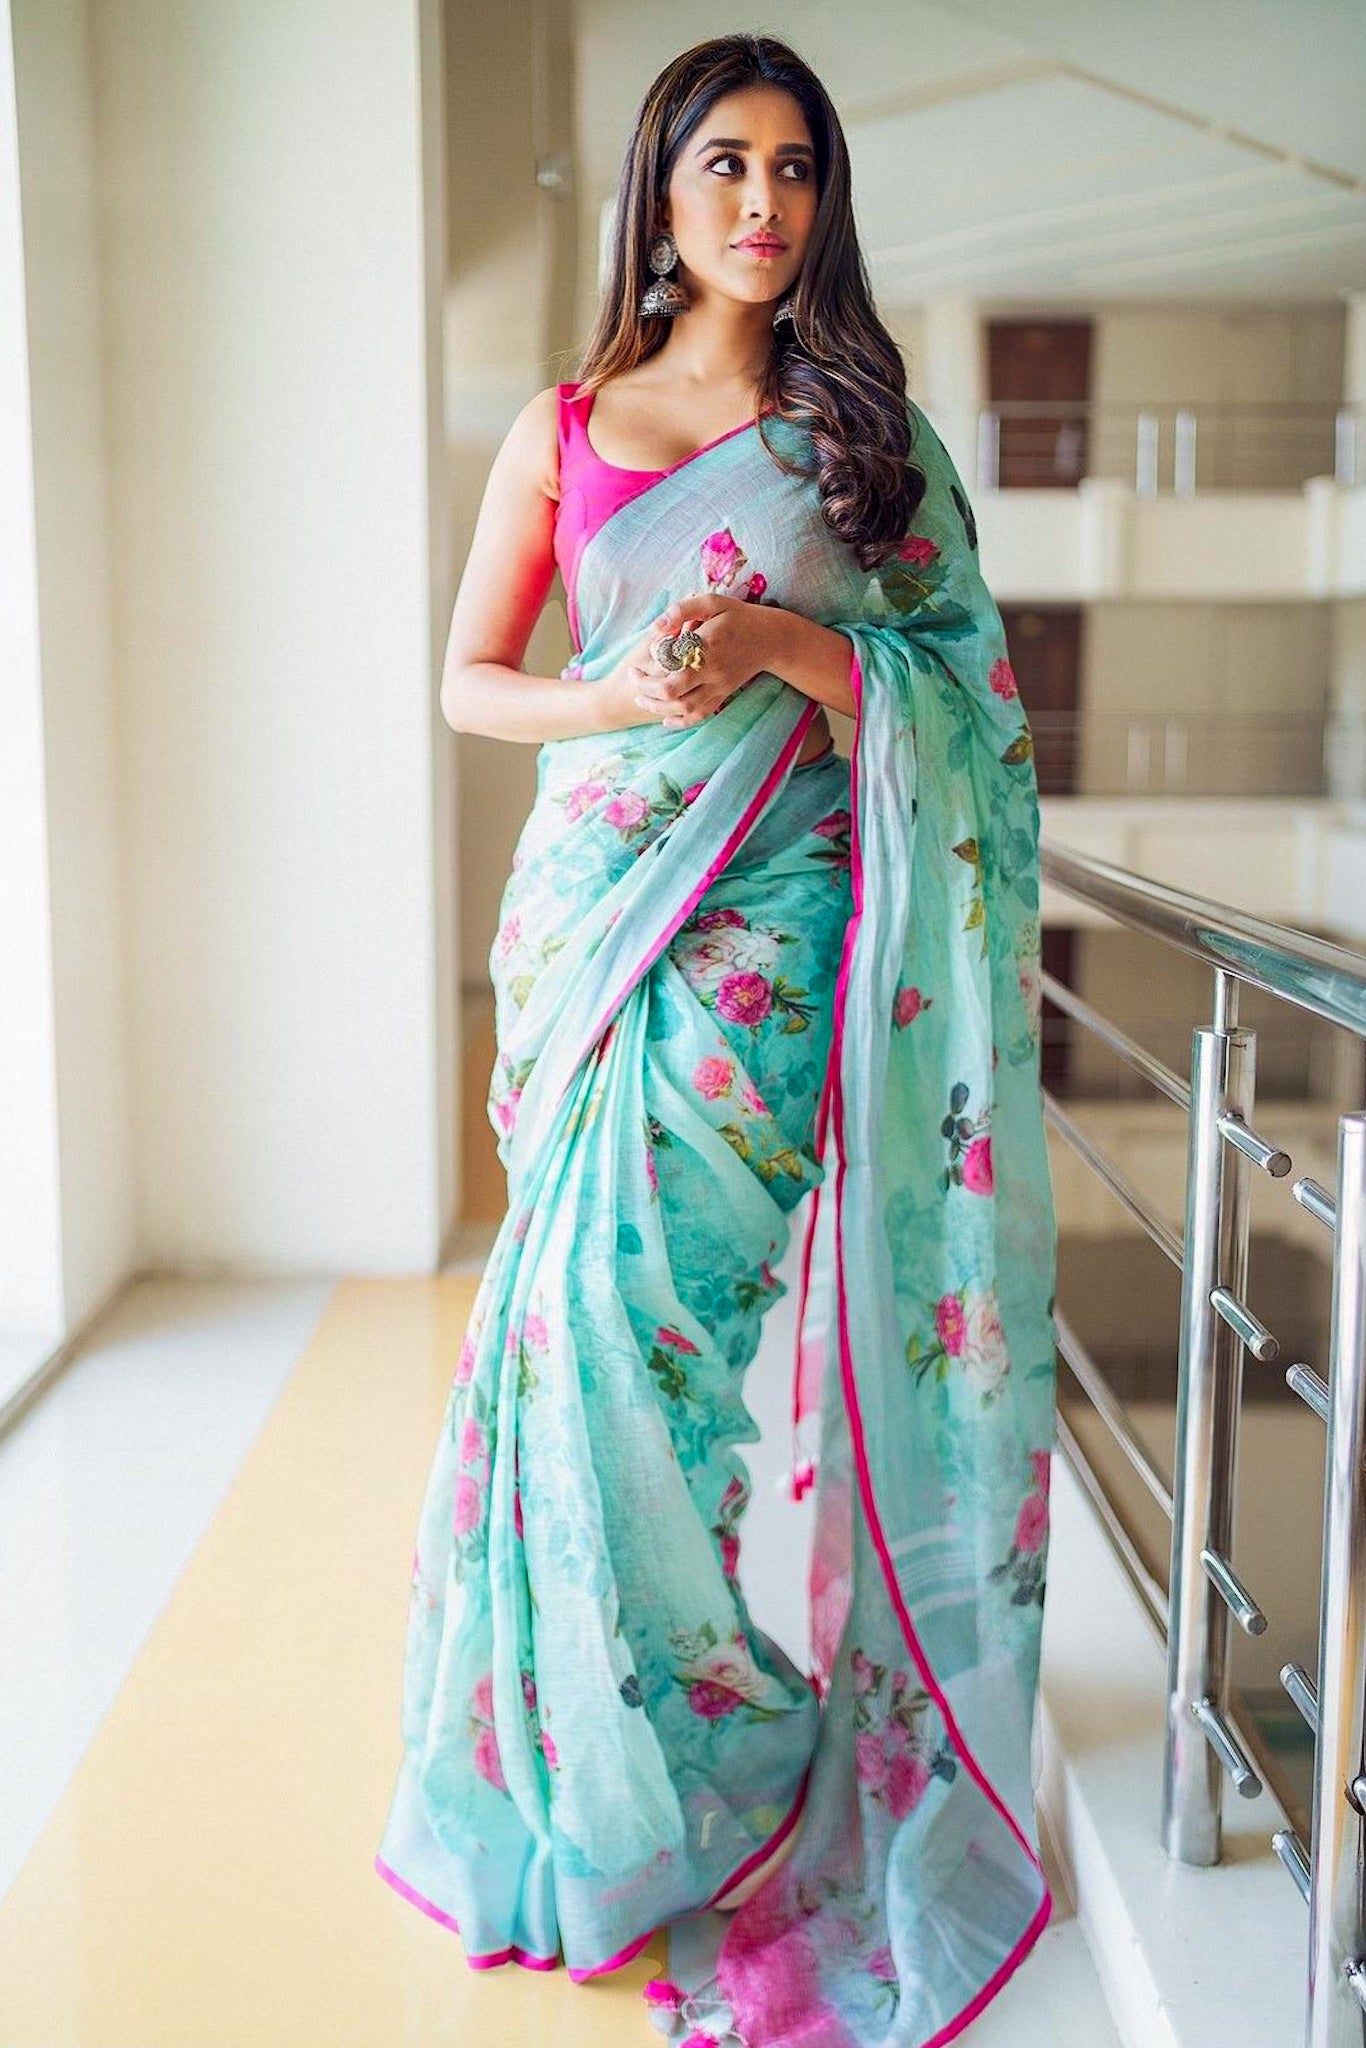 nabha natesh in floral digital printed handloom pure linen saree - linenworldonline.in